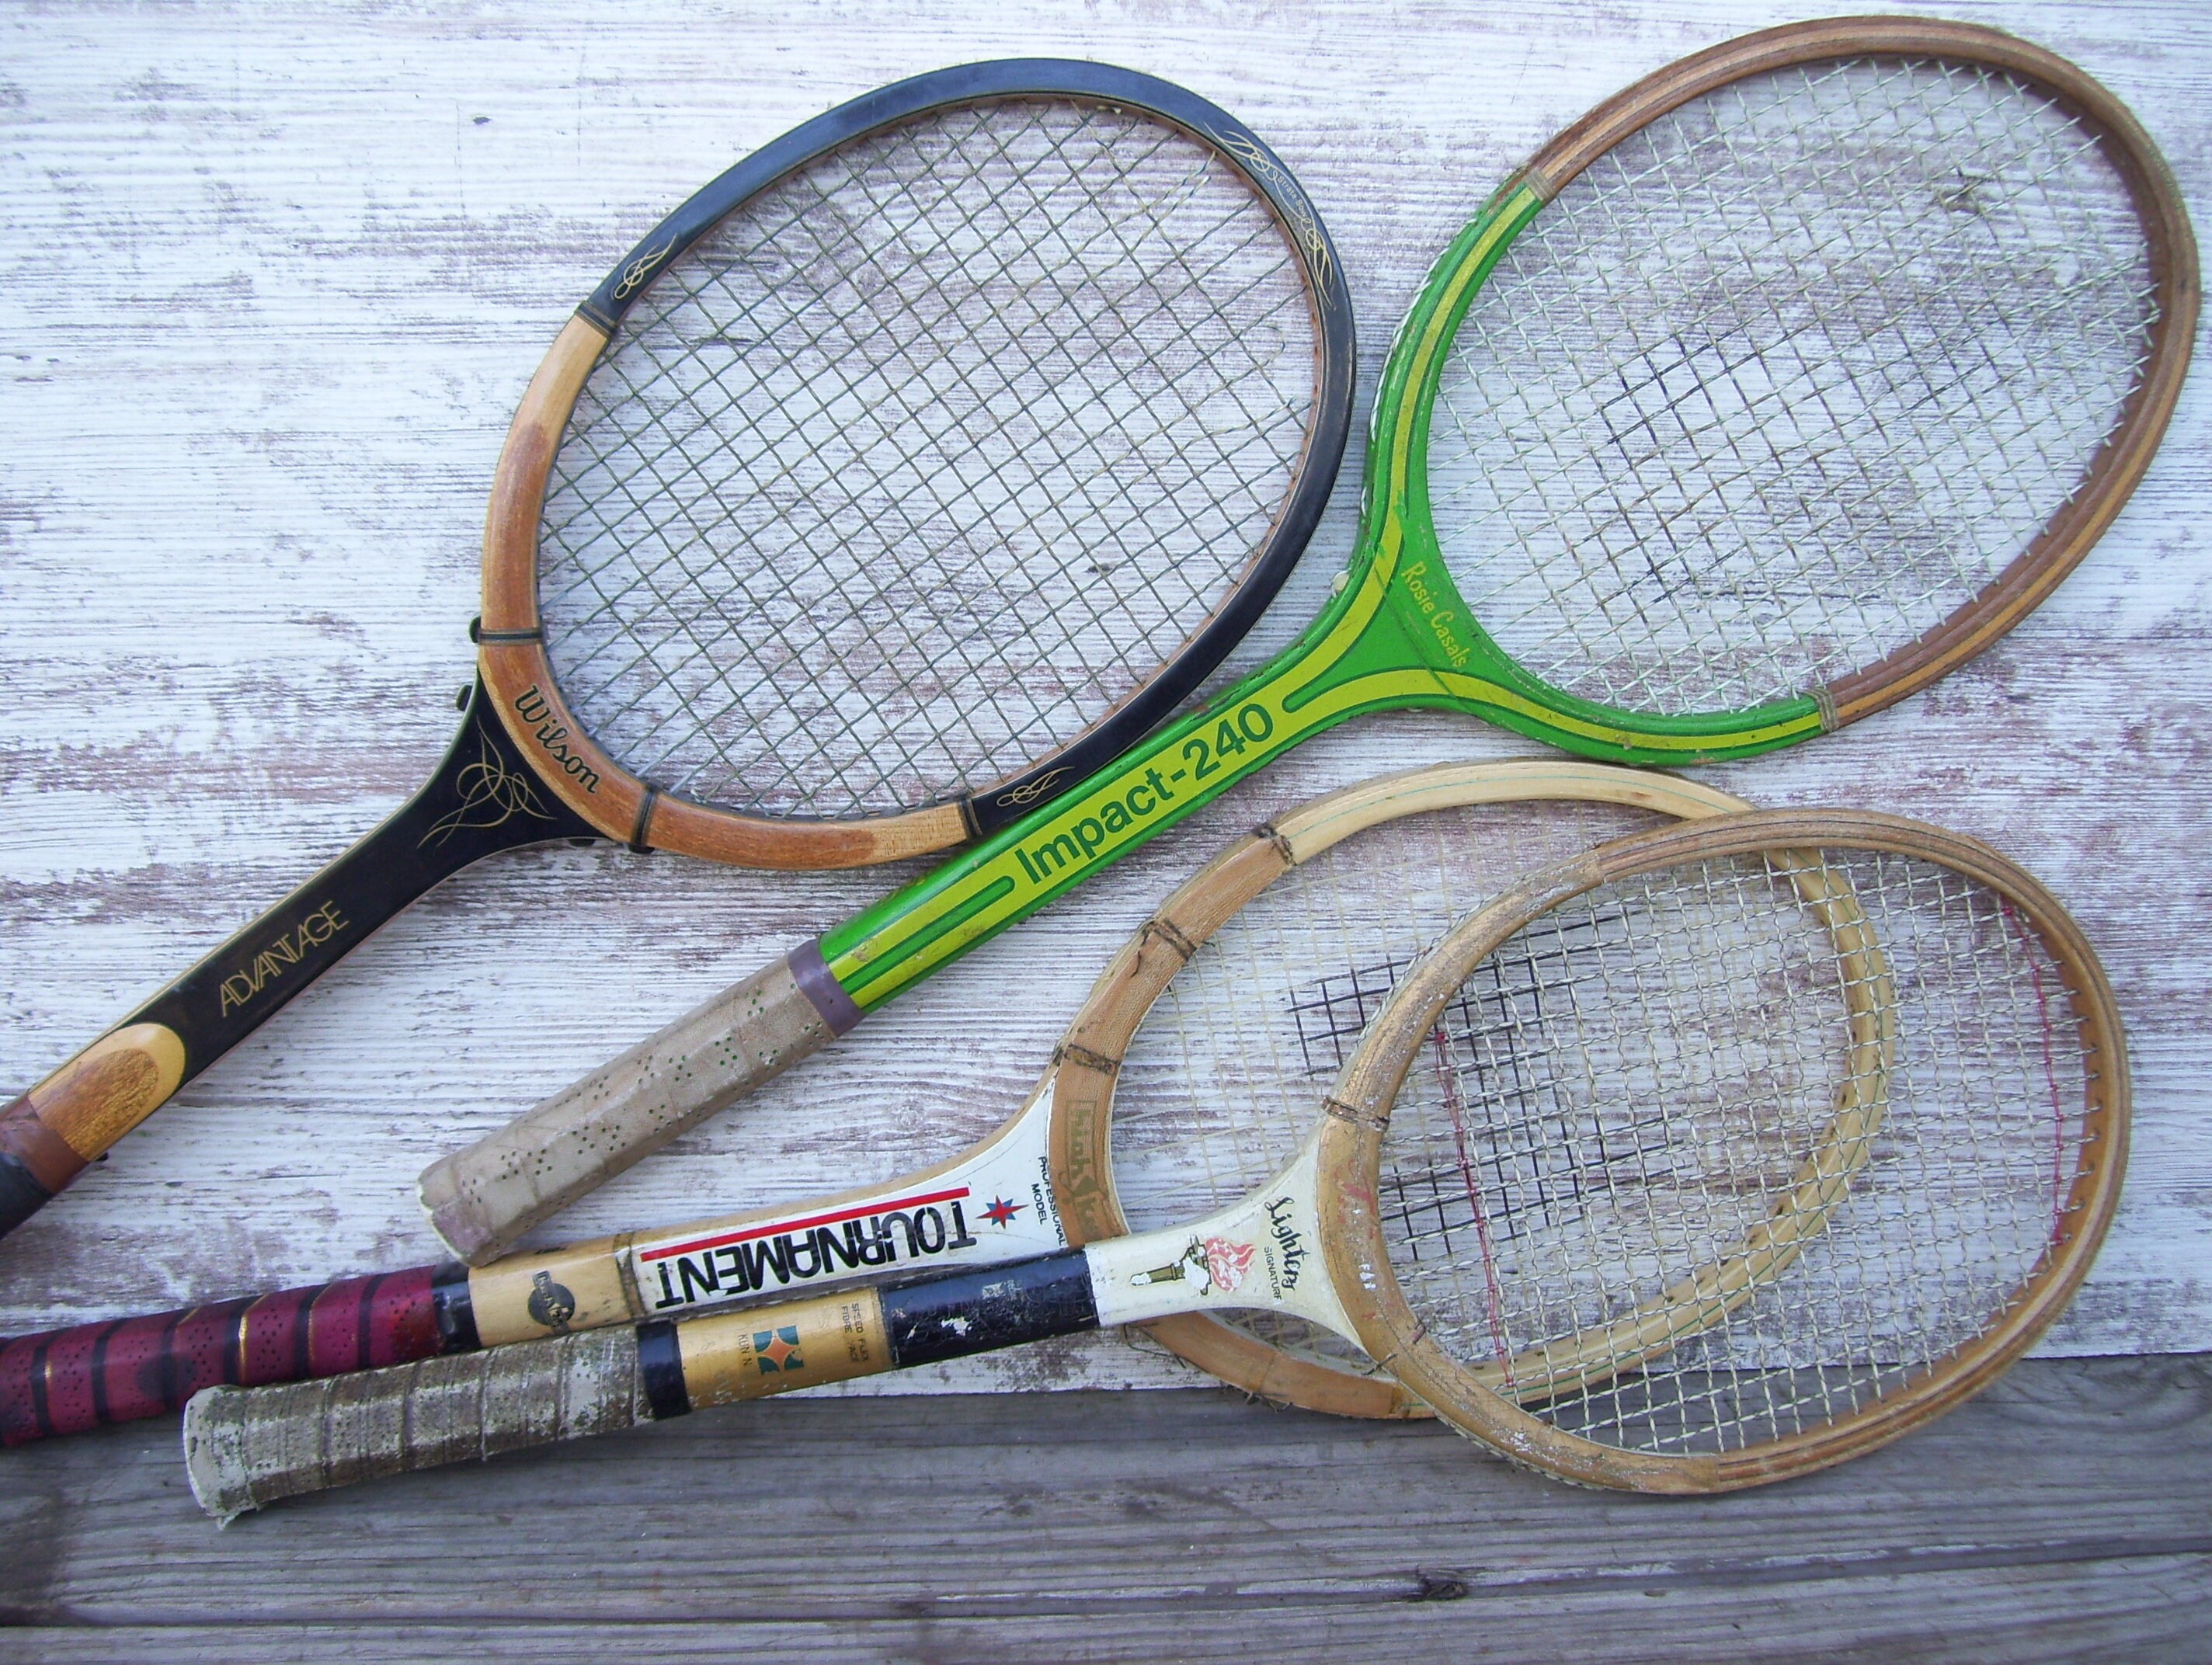 Spalding Speedshaft 4-1/2 Vintage Wood Fiberglass Tennis Racquet